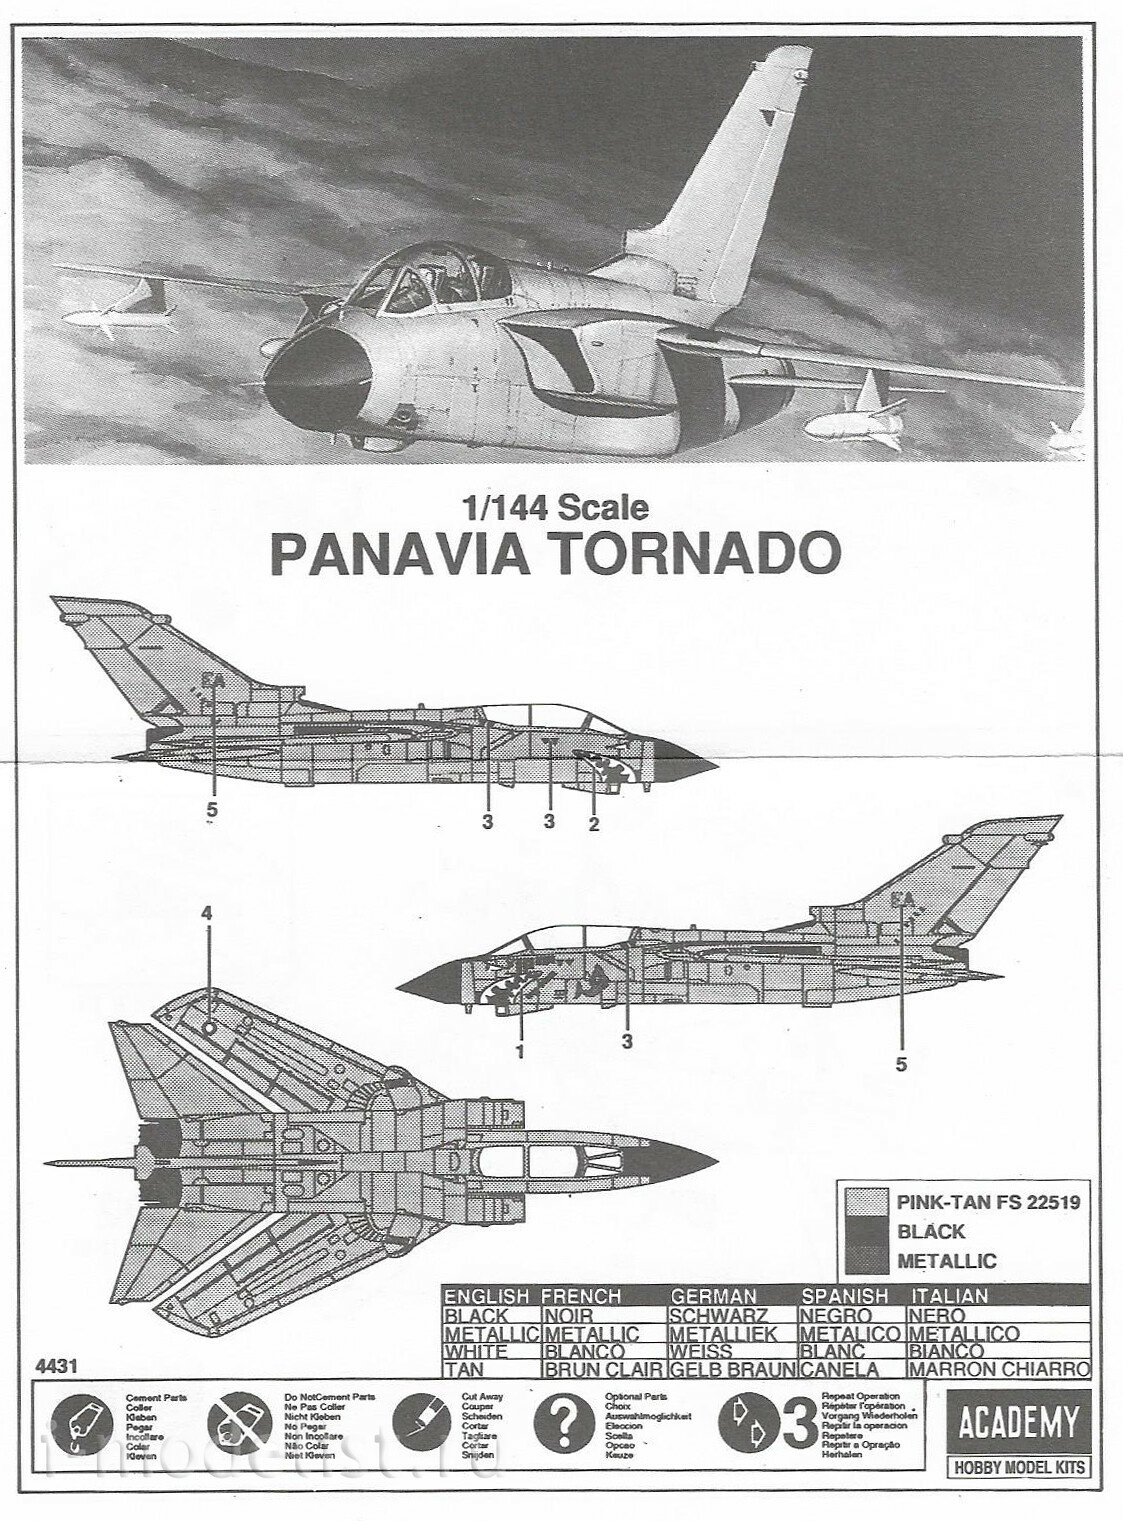 12607 Academy 1/144 Истребитель-бомбардировщик Panavia Tornado